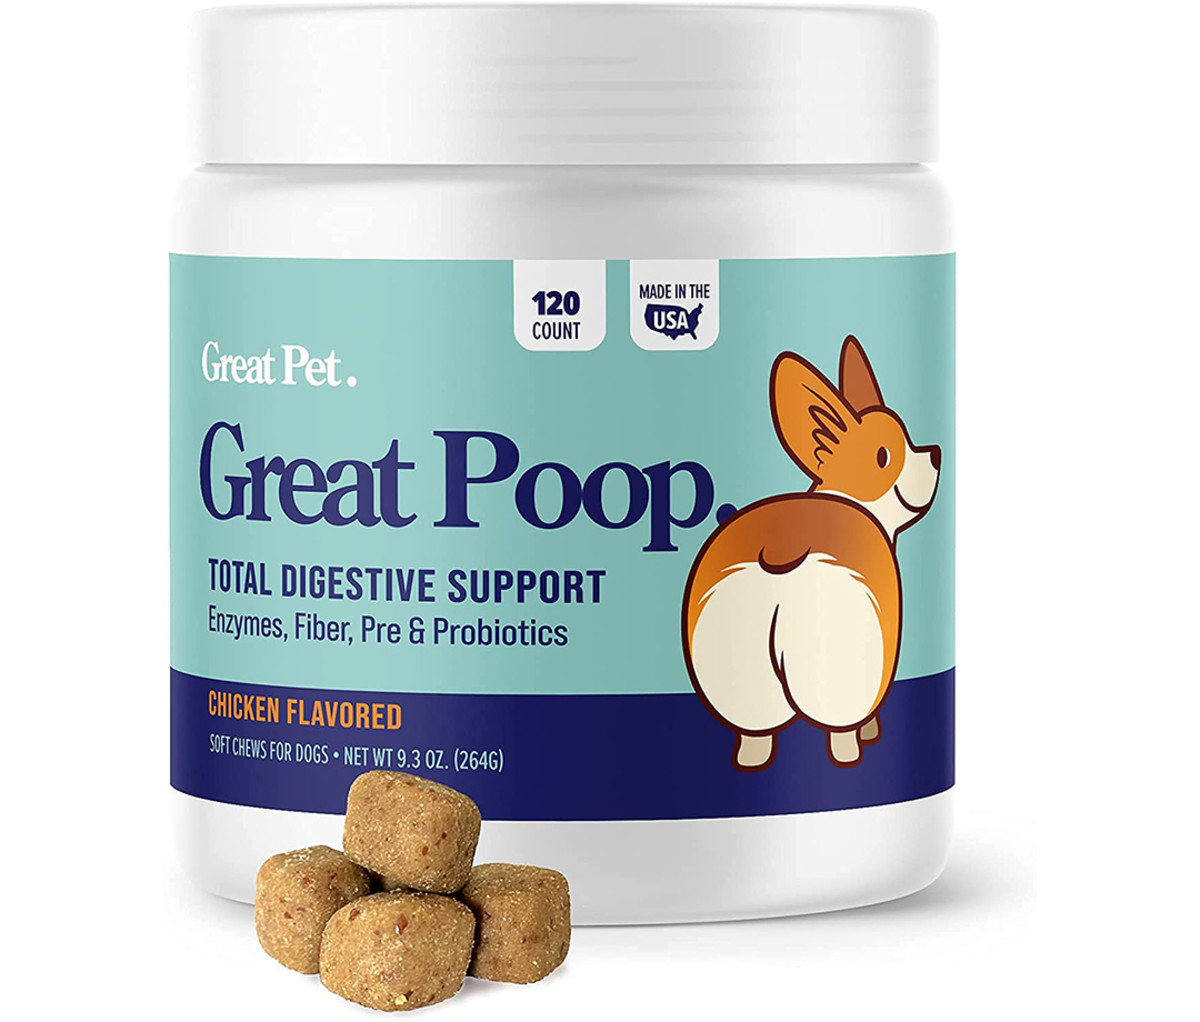 Great Poop Probiotics for Dogs